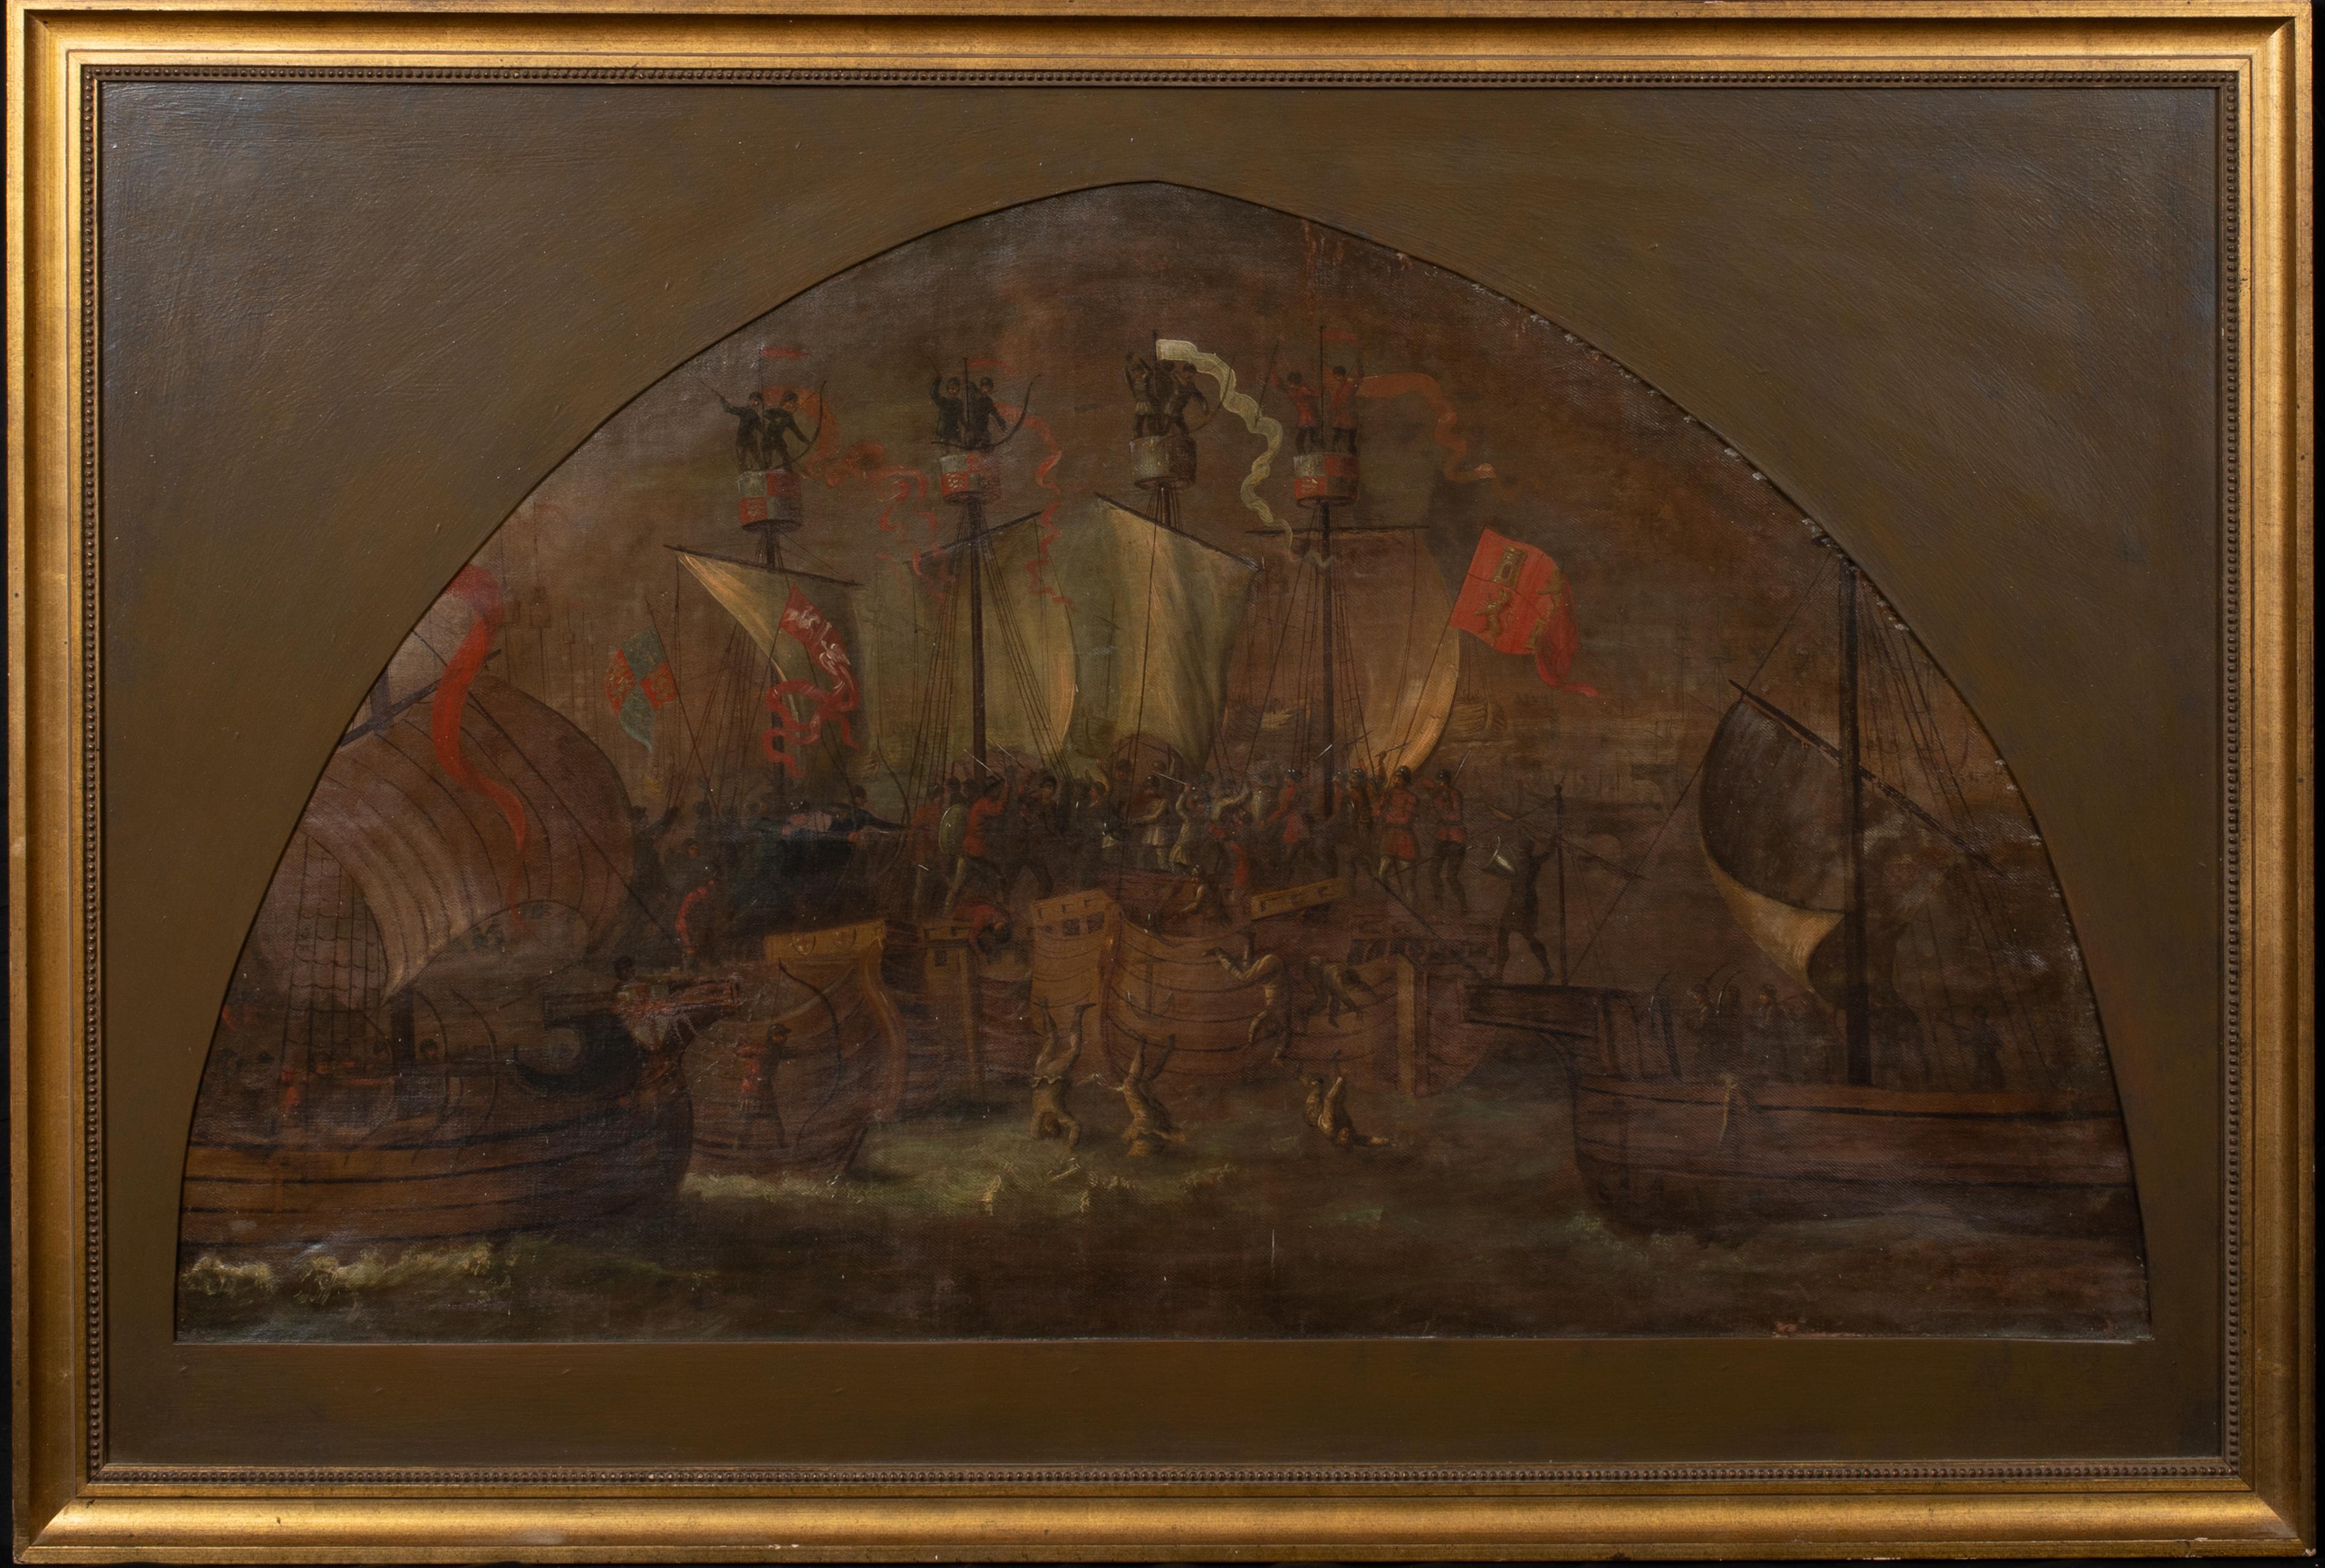 Unknown Landscape Painting – The Battle Of Sluys (1340) - Der Hundertjährige Krieg (1337-1453)